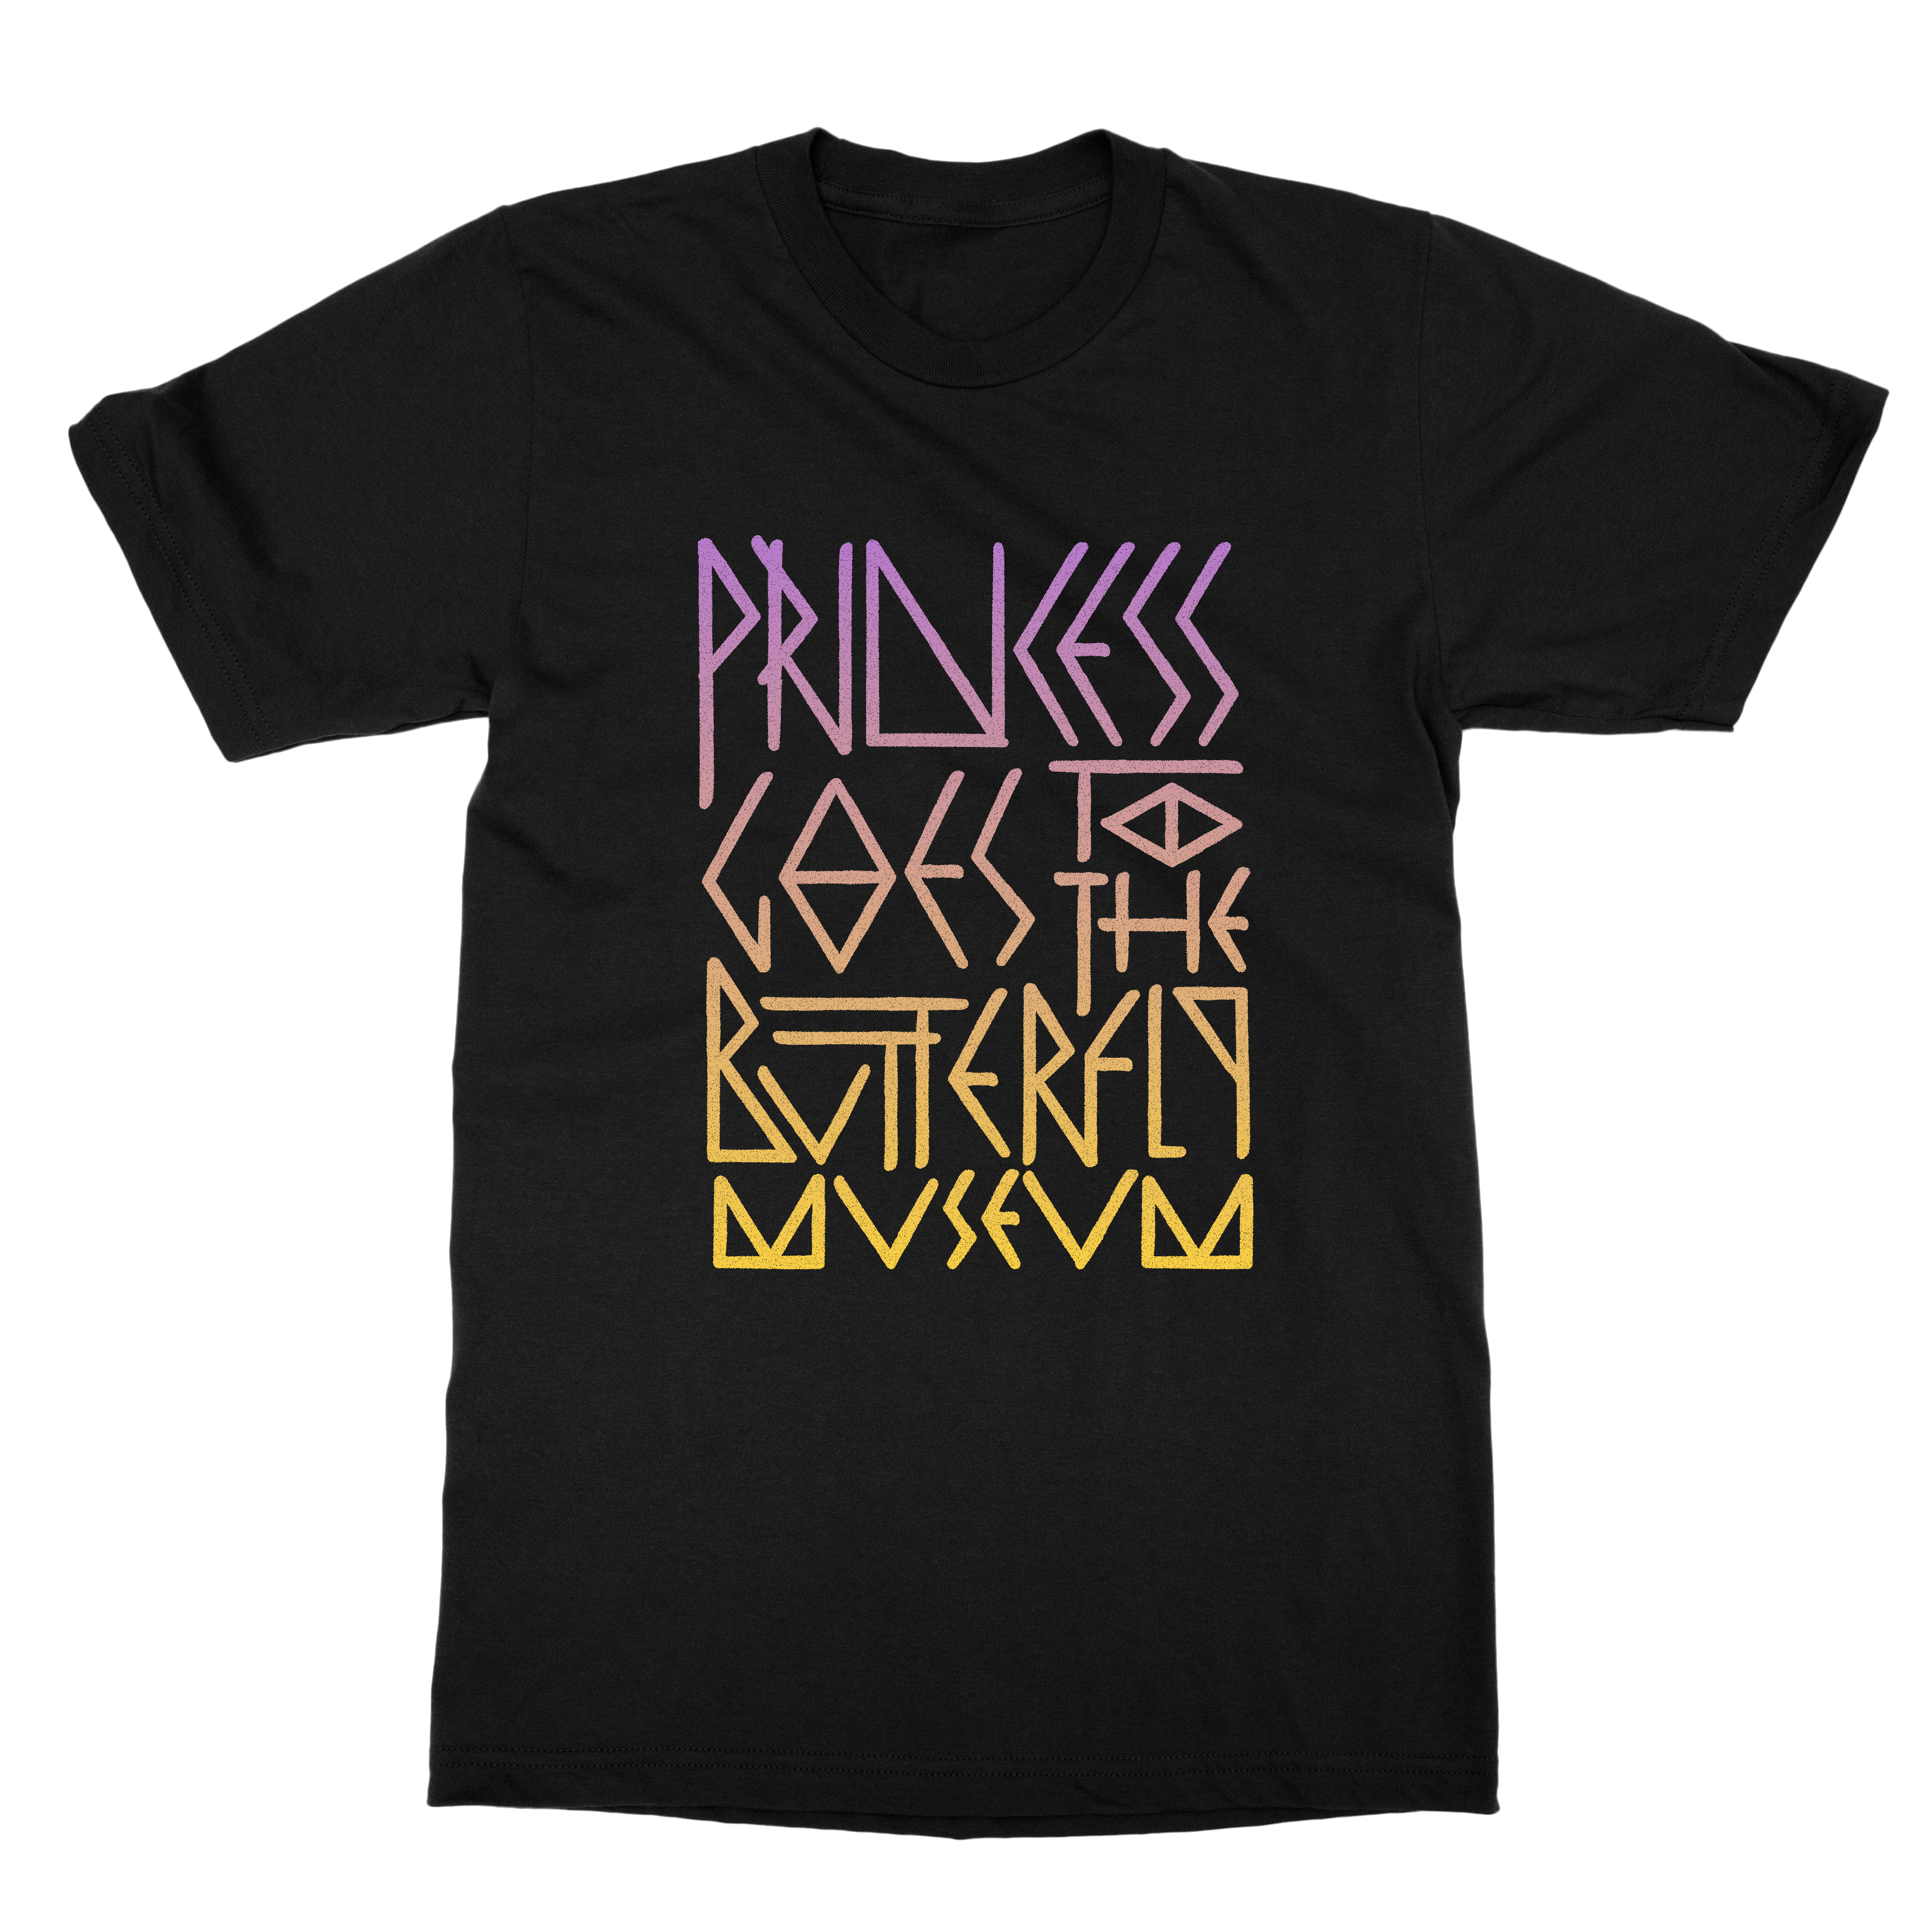 Princess Goes | Words T-Shirt